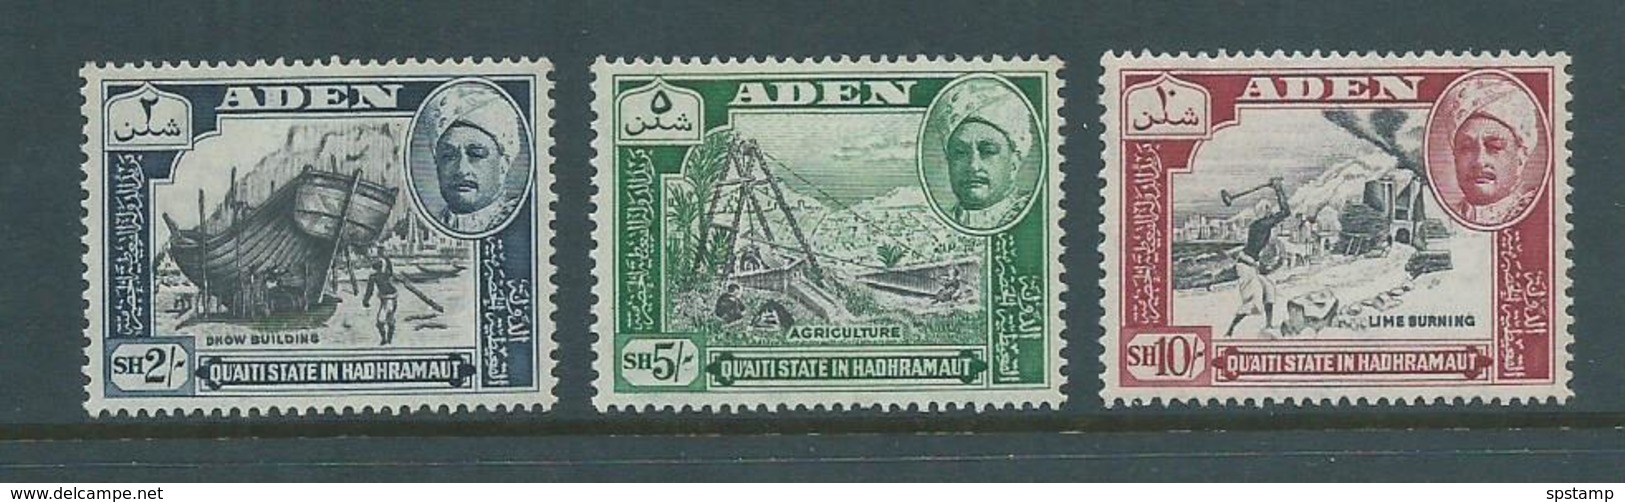 Aden Qu'aiti State Hadhramaut 1955 Pictorials Top 3 Values 2/- -> 10/- Fresh MLH - Aden (1854-1963)